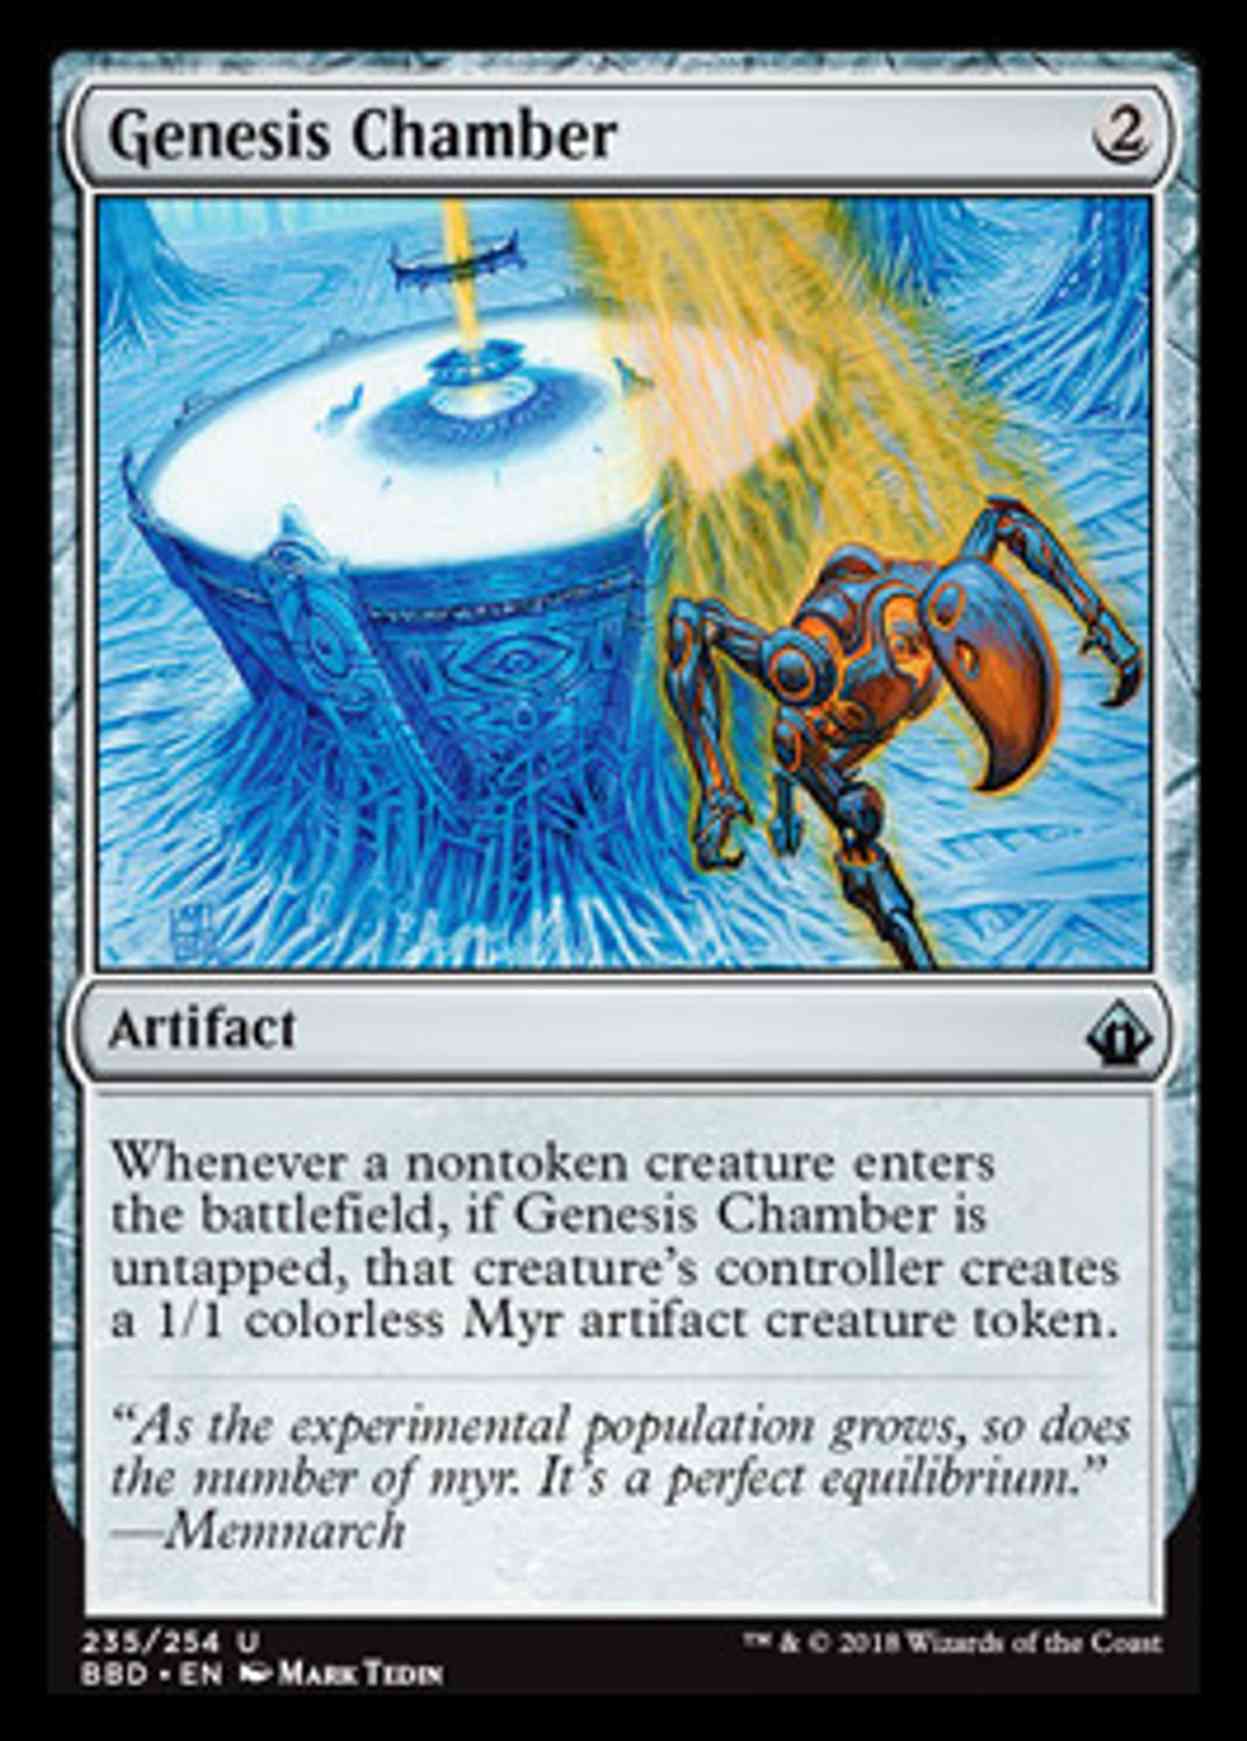 Genesis Chamber magic card front